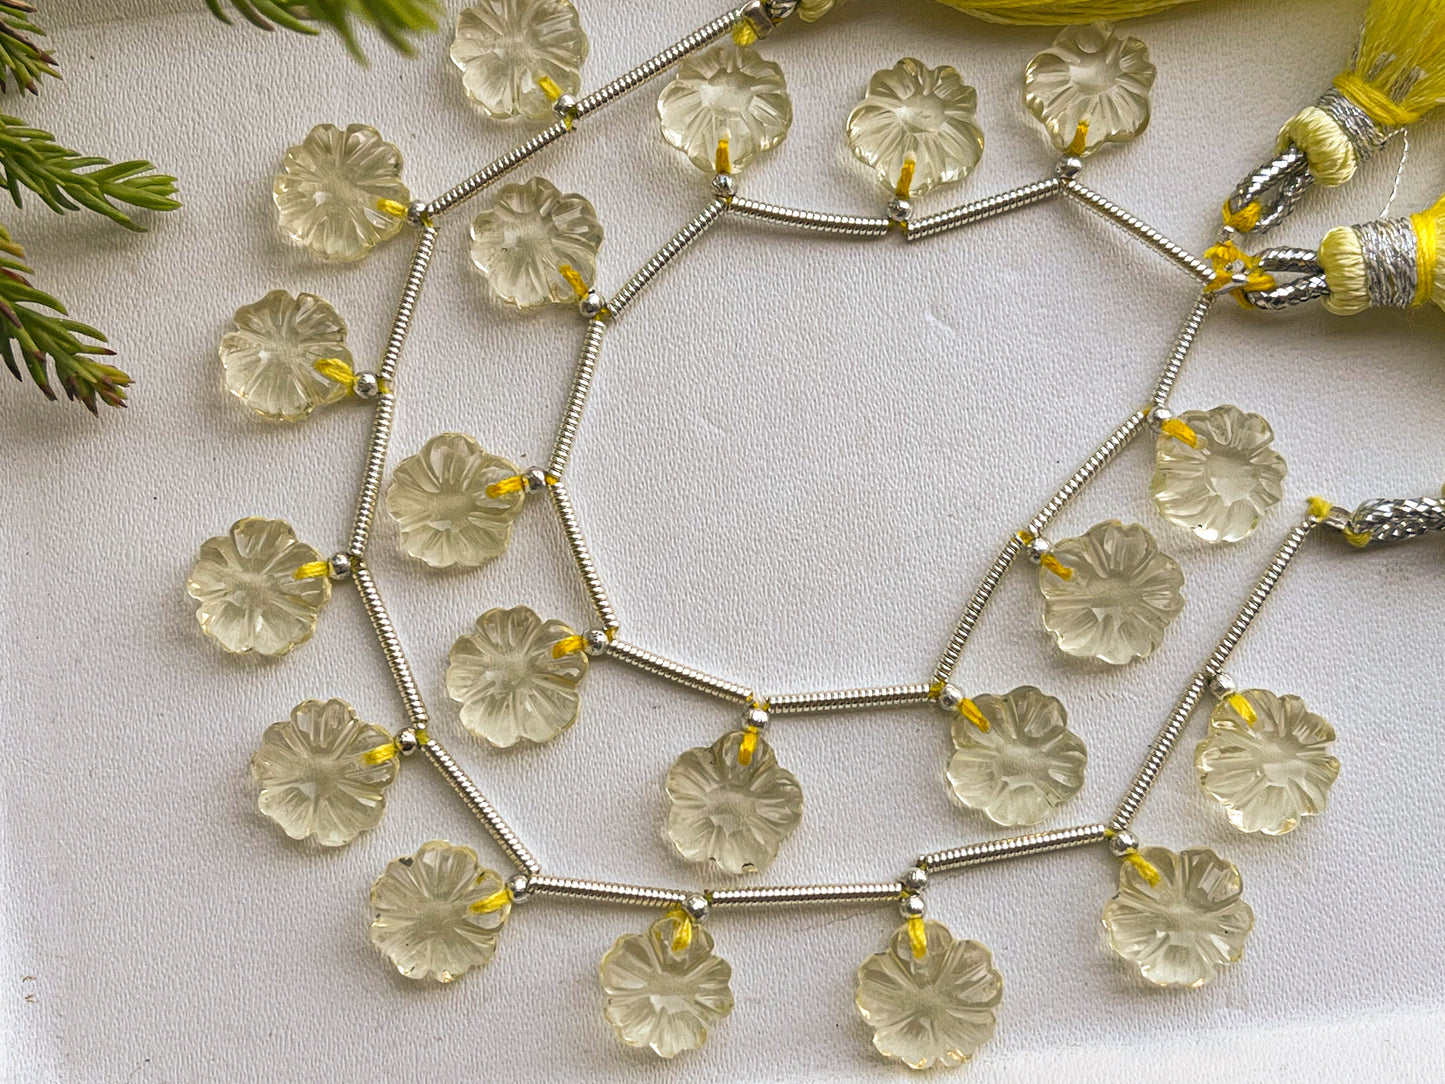 Lemon Quartz Flower Carving Beads, 9x9mm | 10 Pieces Beadsforyourjewelry